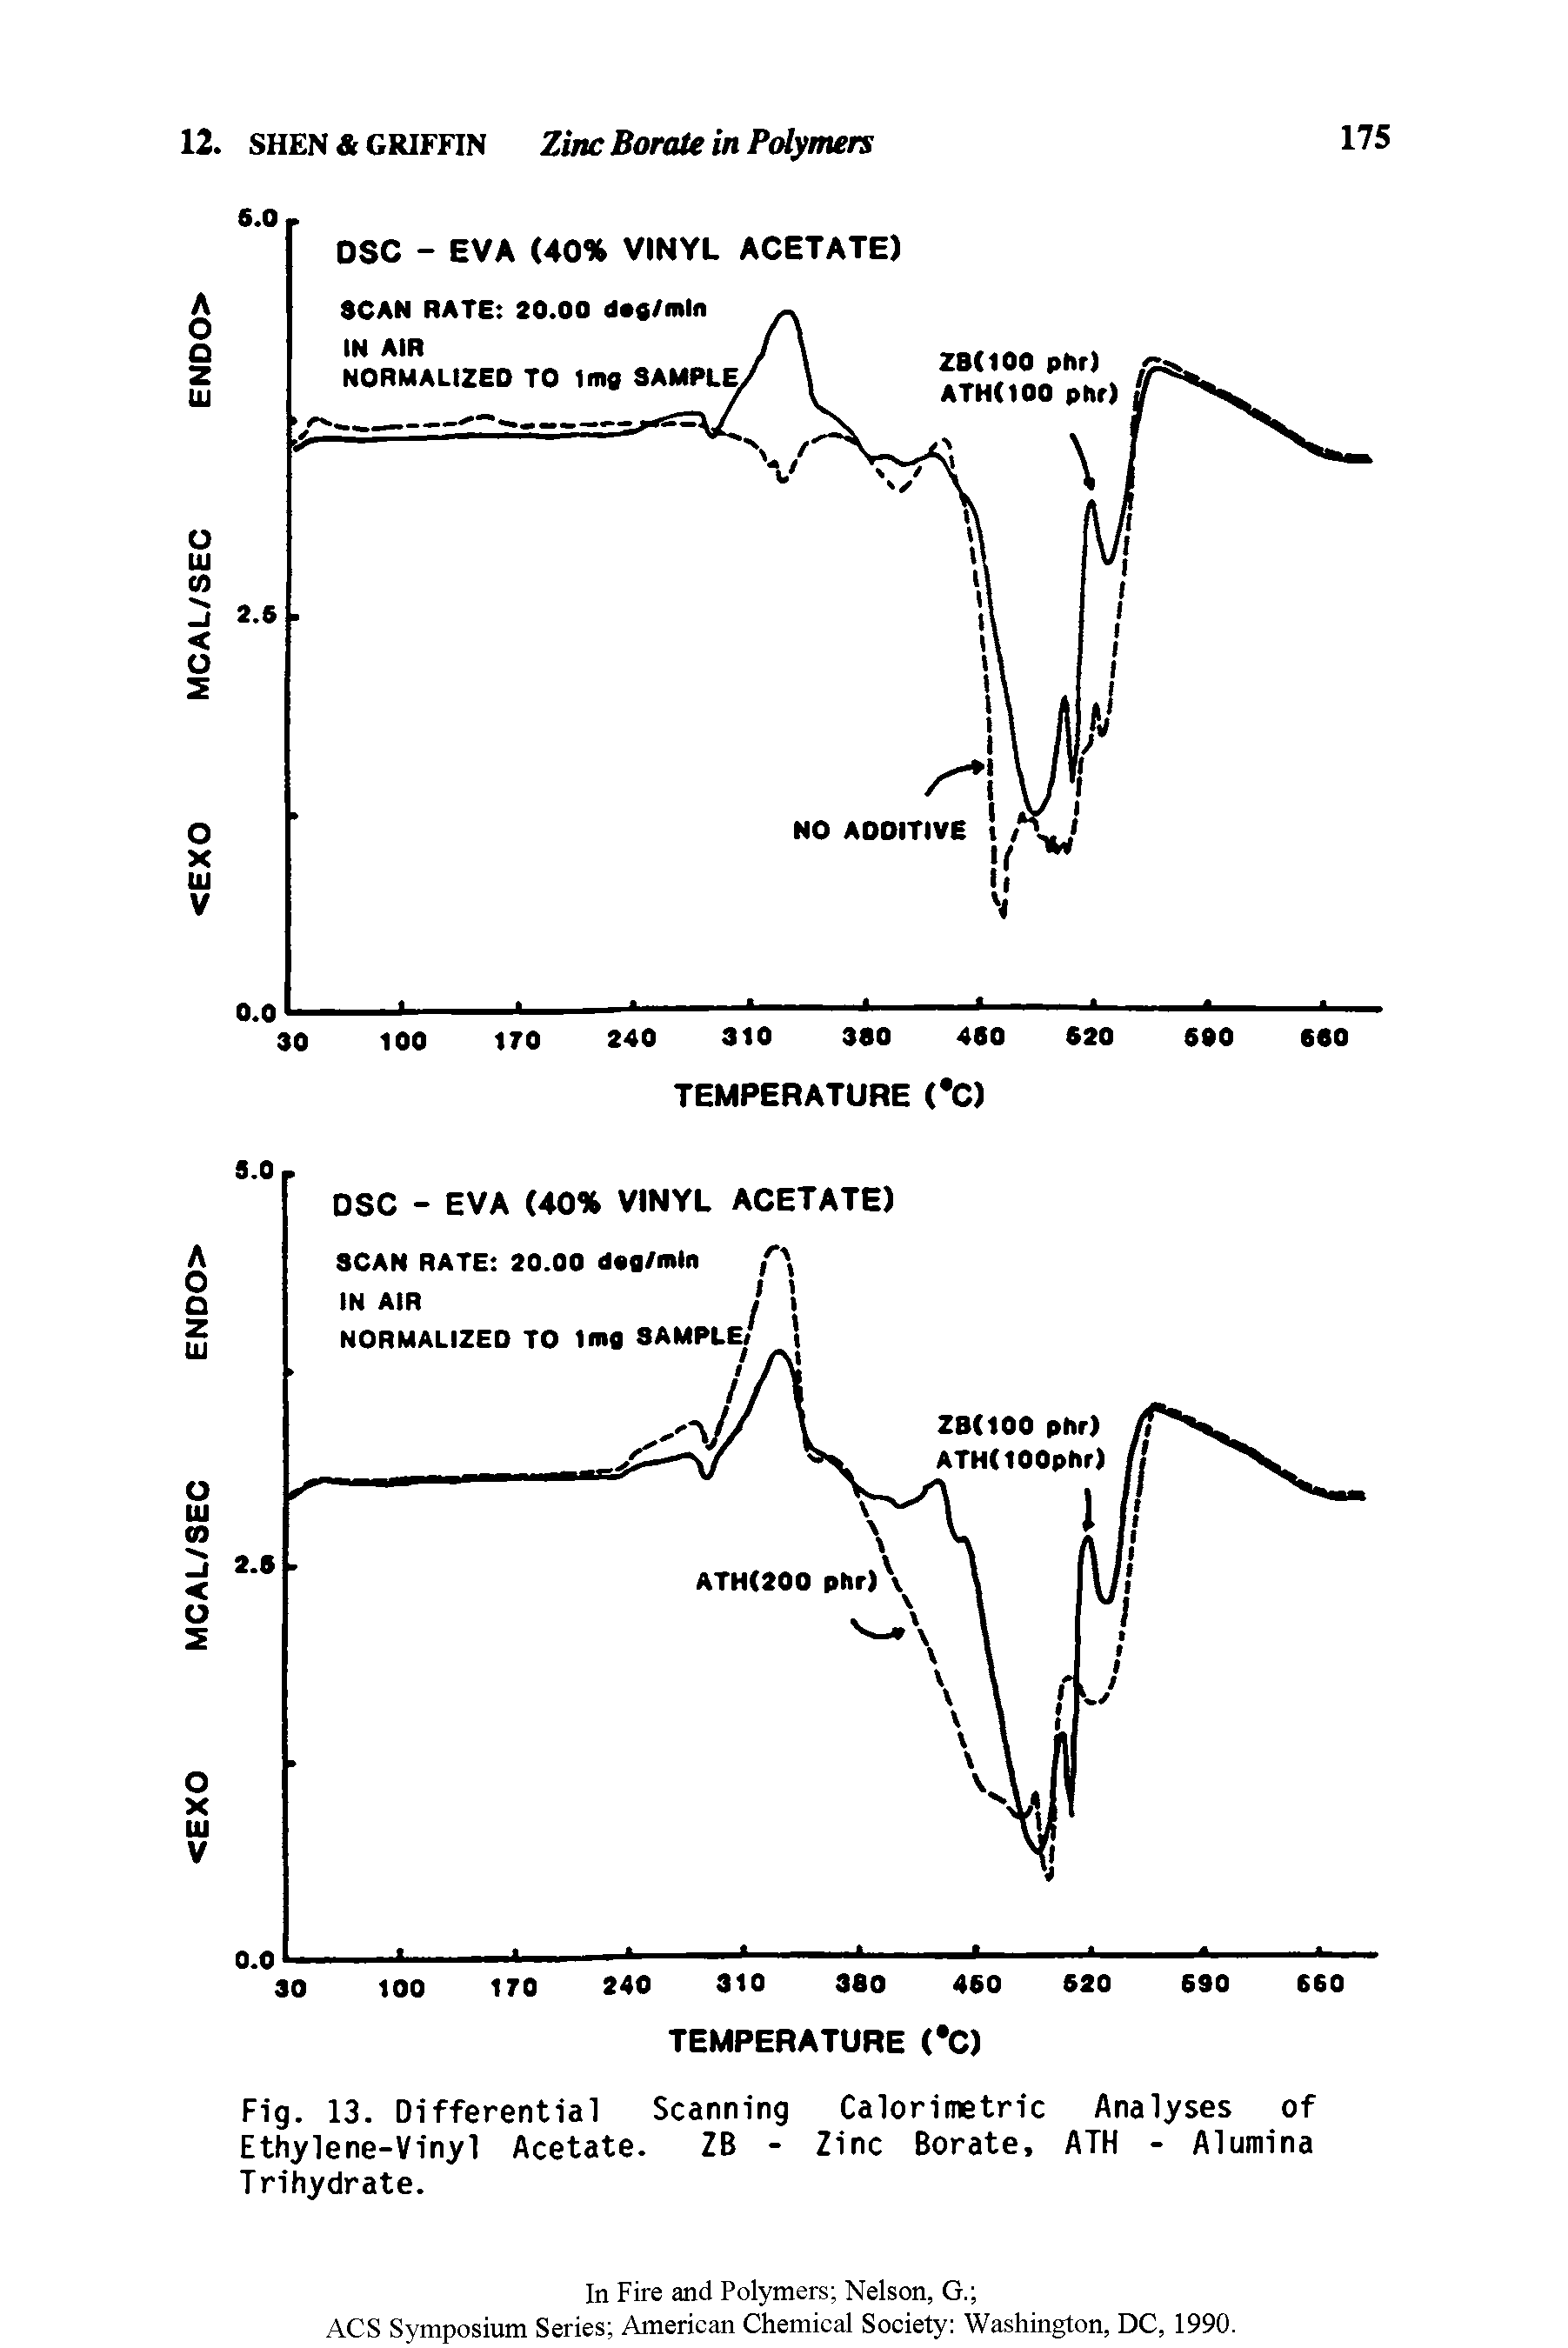 Fig. 13. Differential Scanning Calorimetric Analyses of Ethylene-Vinyl Acetate. ZB - Zinc Borate, ATH - Alumina Trihydrate.